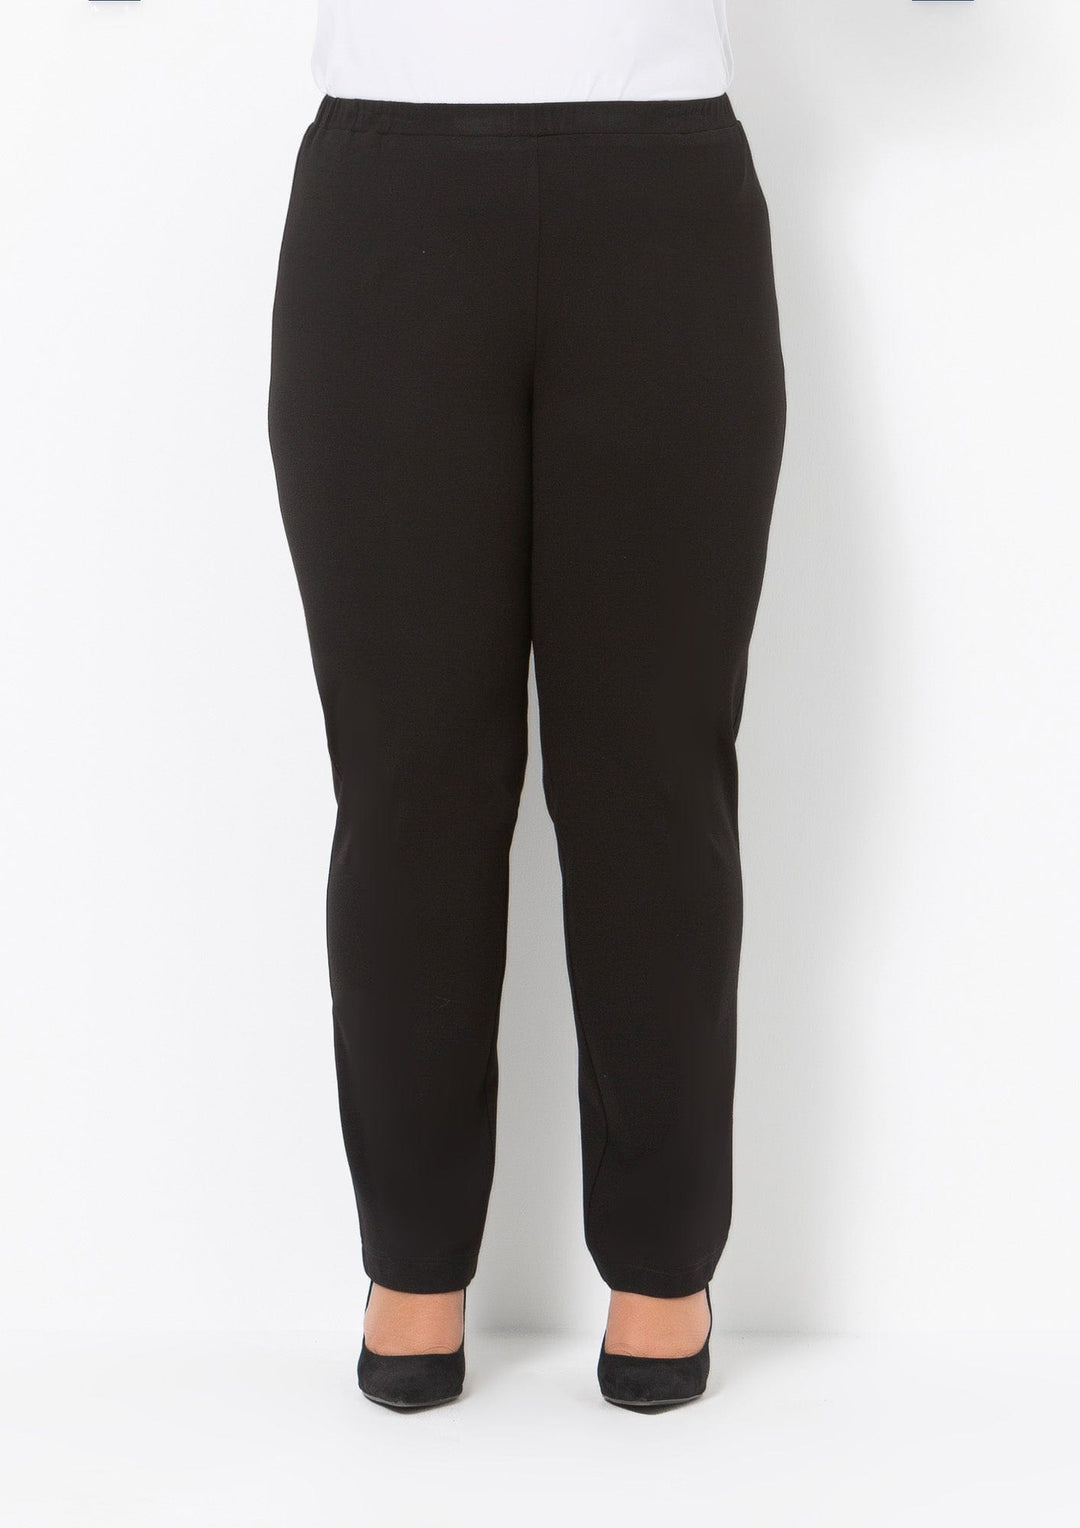 Buy Women's Plus Size Pants Online Australia  Swish + Sizes 12-26 – Tagged  size-size-26– Swish Fashion